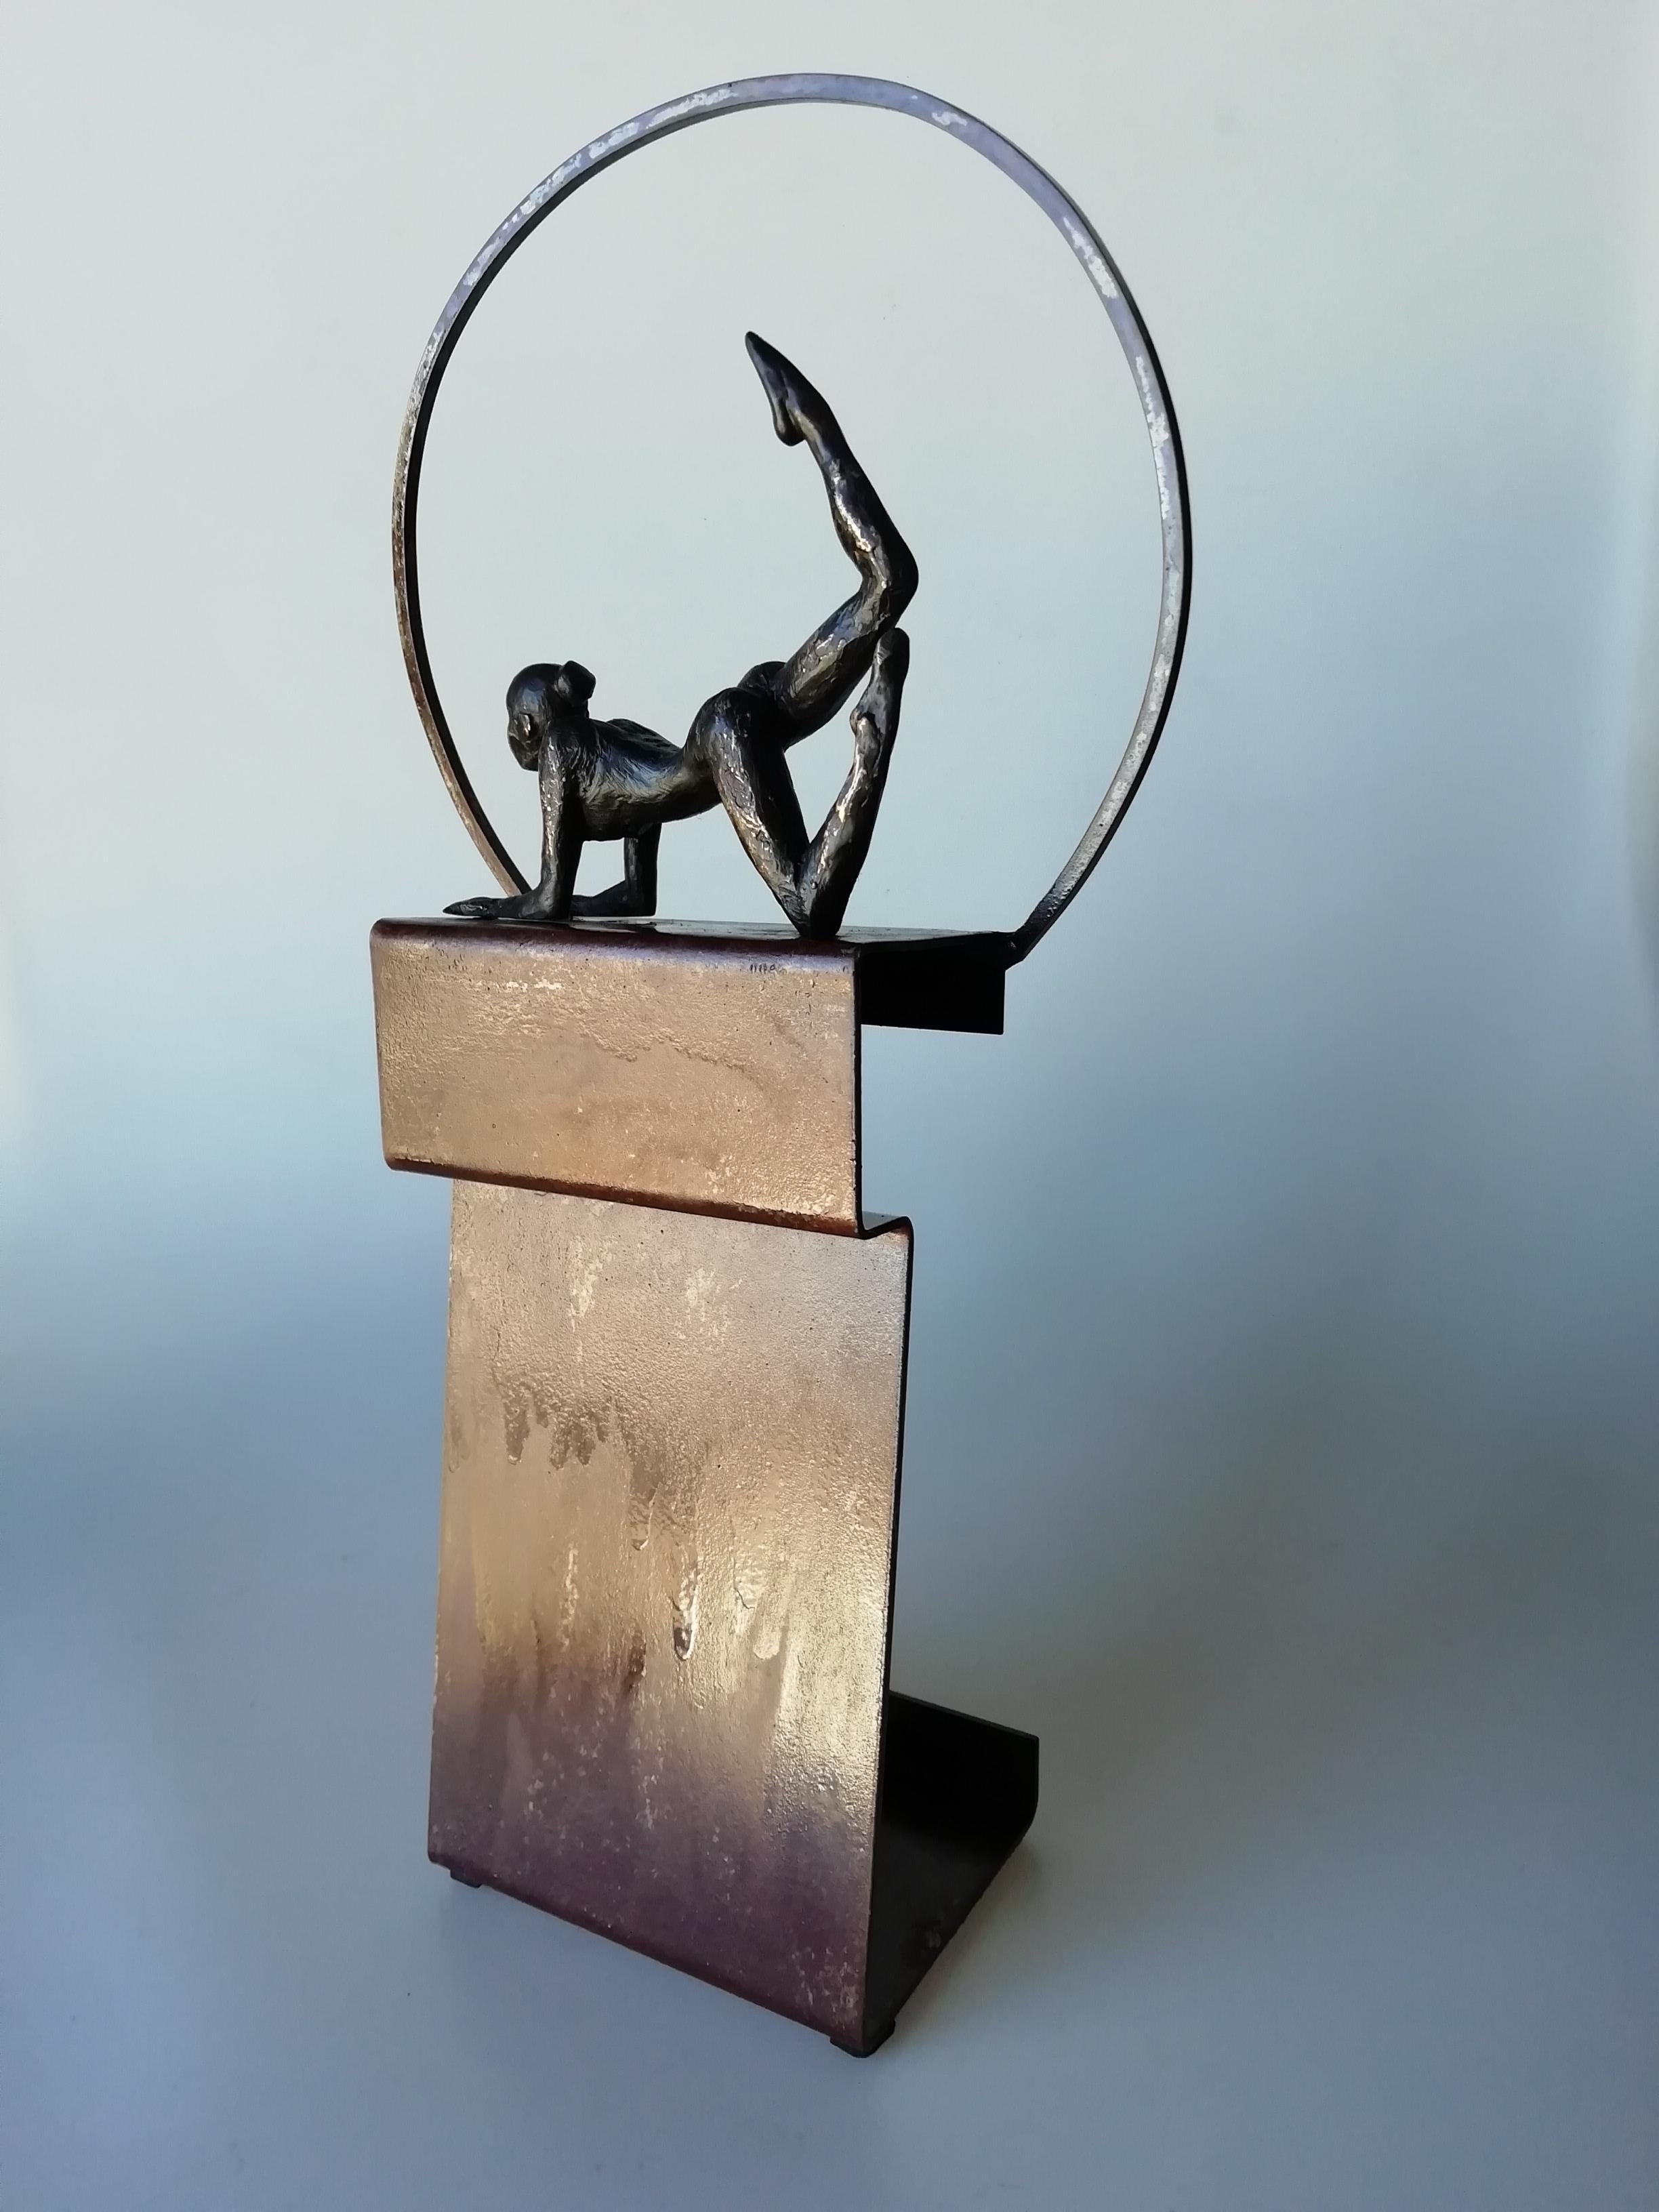 Joan Artigas Planas Figurative Sculpture - "Alegria" contemporary bronze table, mural sculpture figurative girl relax yoga